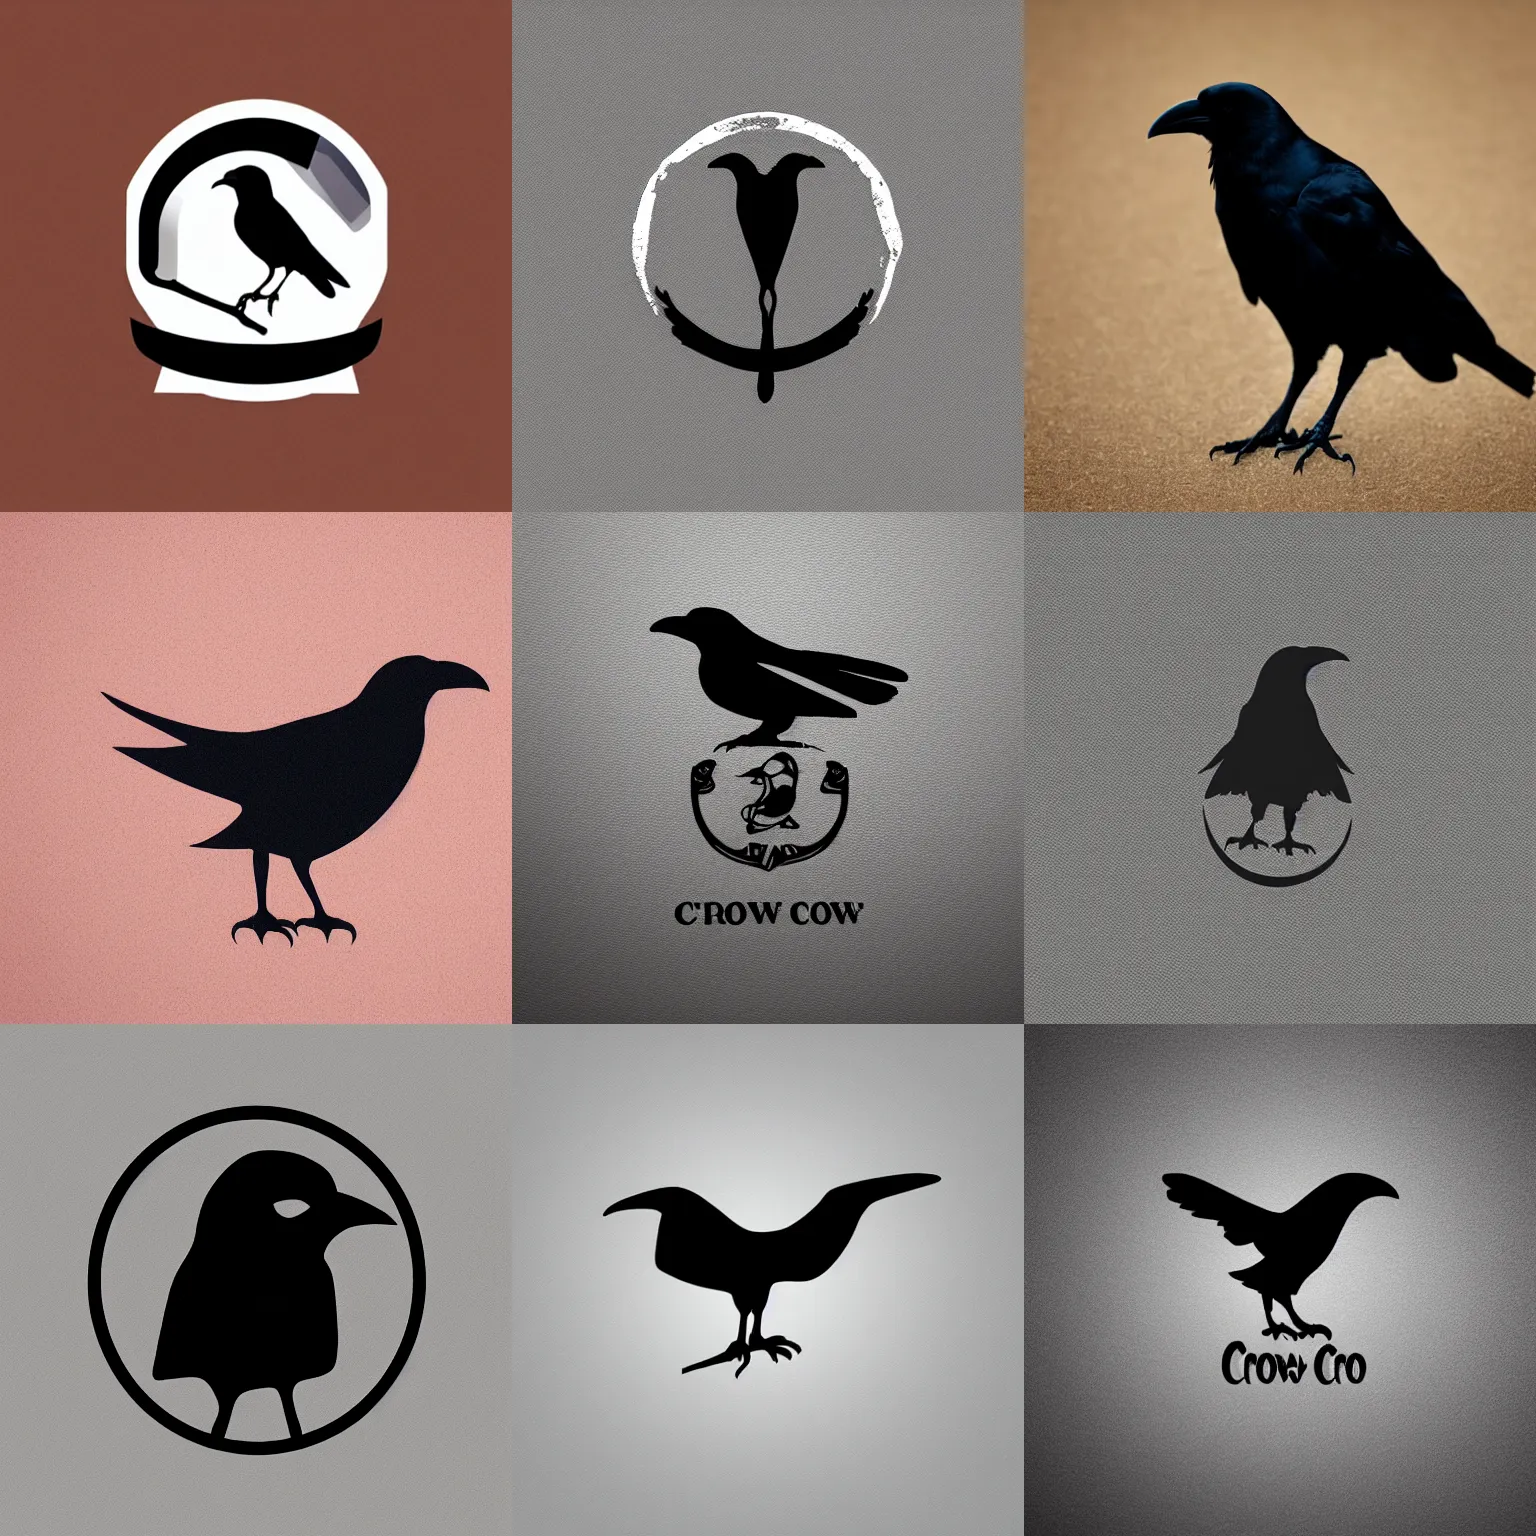 Prompt: minimalist logo of a crow